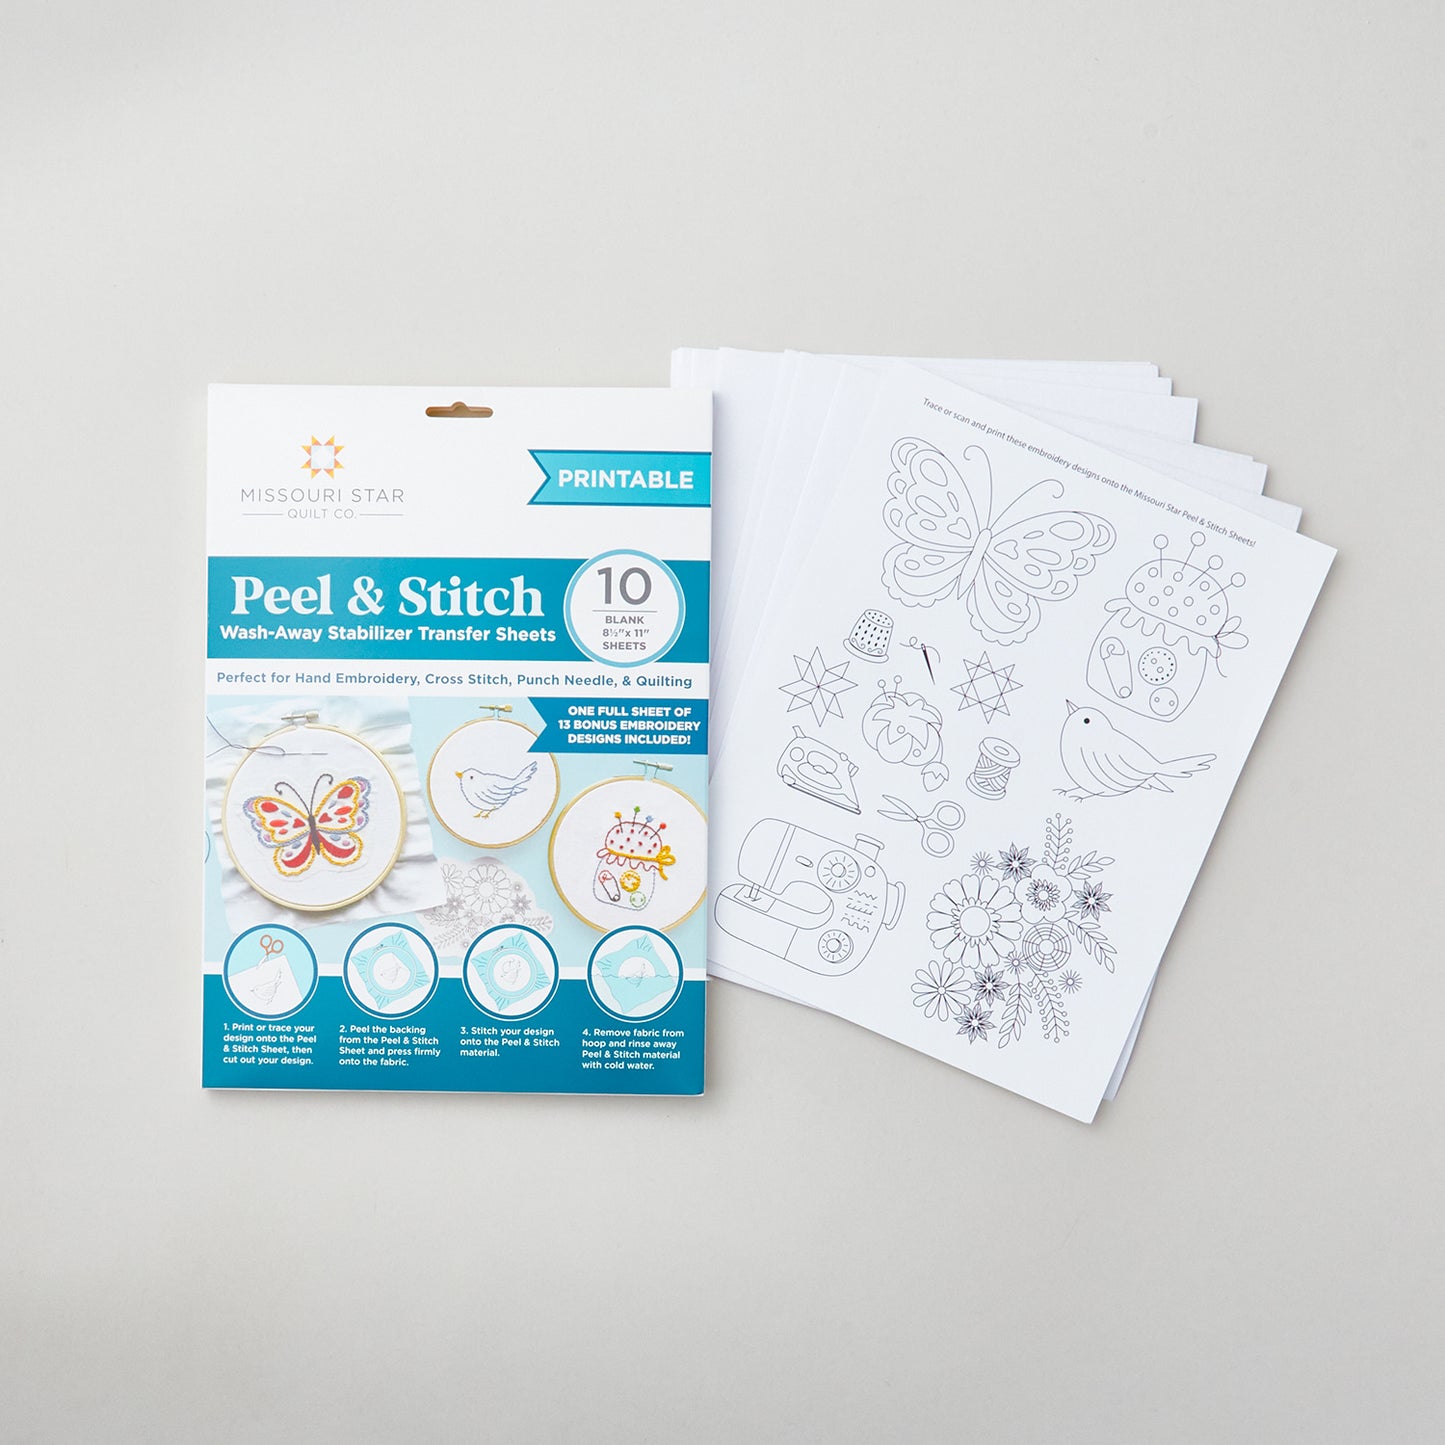 Missouri Star Peel & Stitch: Printable, Wash-away Transfer Sheets 10pk Alternative View #1